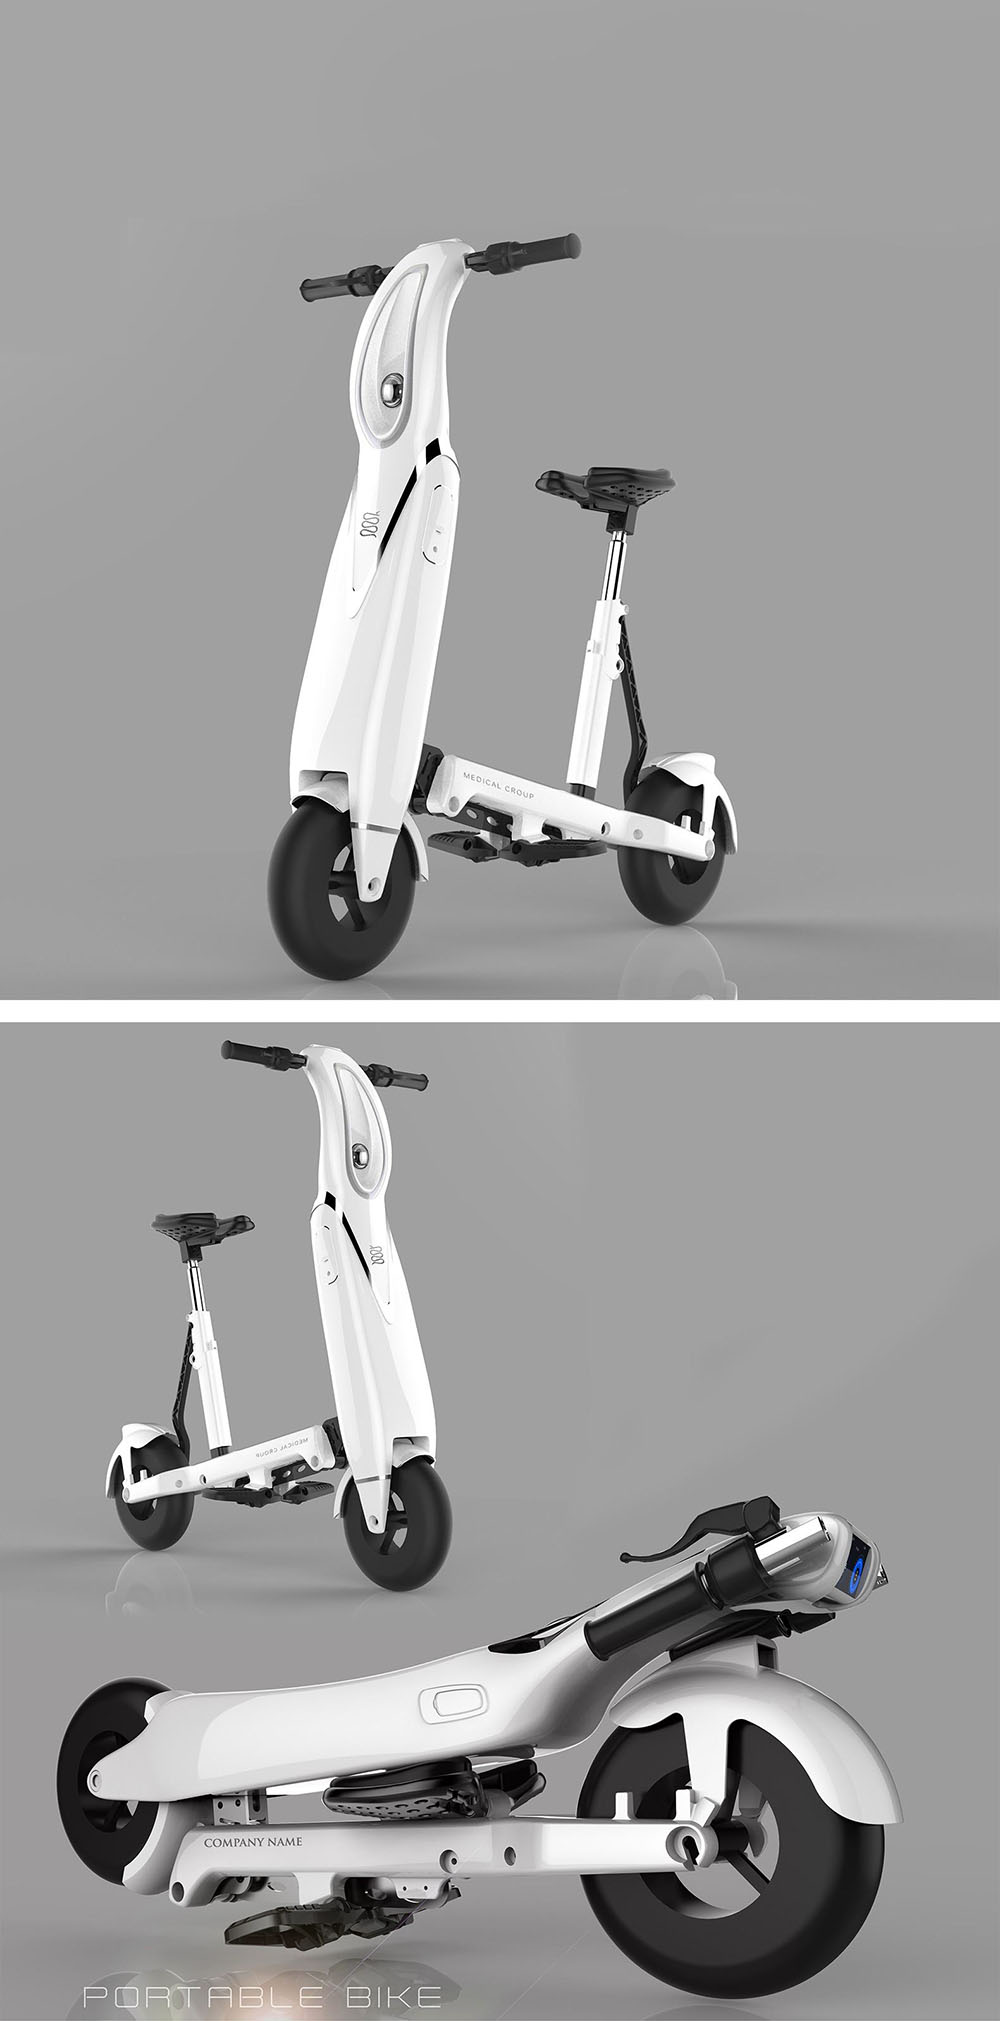 High-quality electric bike design